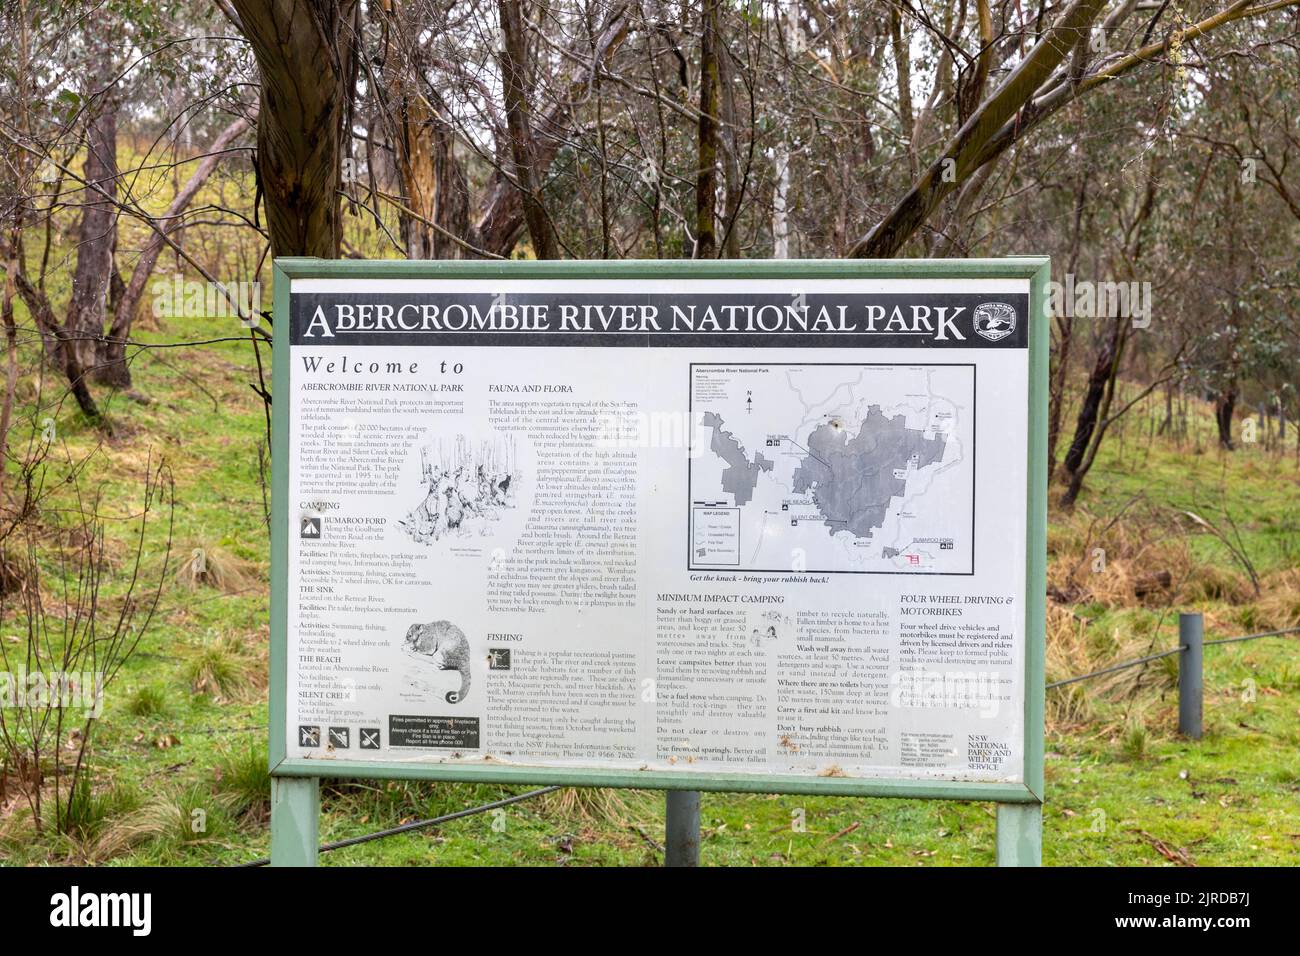 Abercrombie River national park sign,NSW,Australia Stock Photo